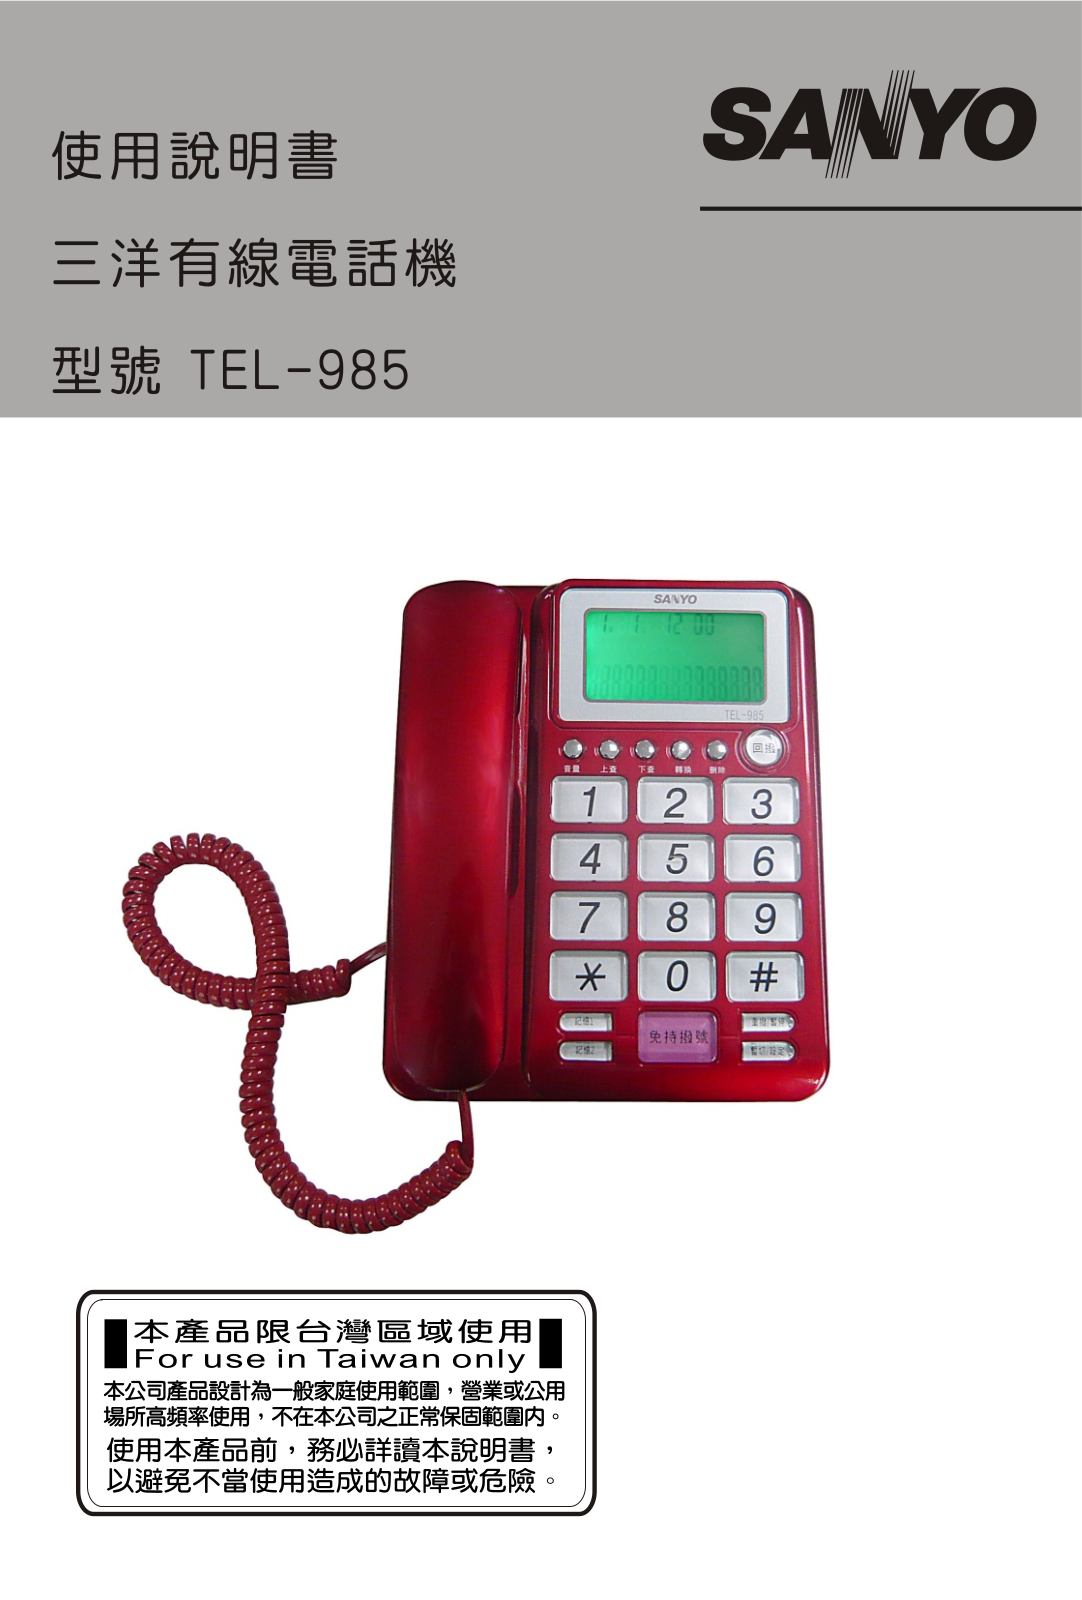 SANYO TEL-985 User Manual